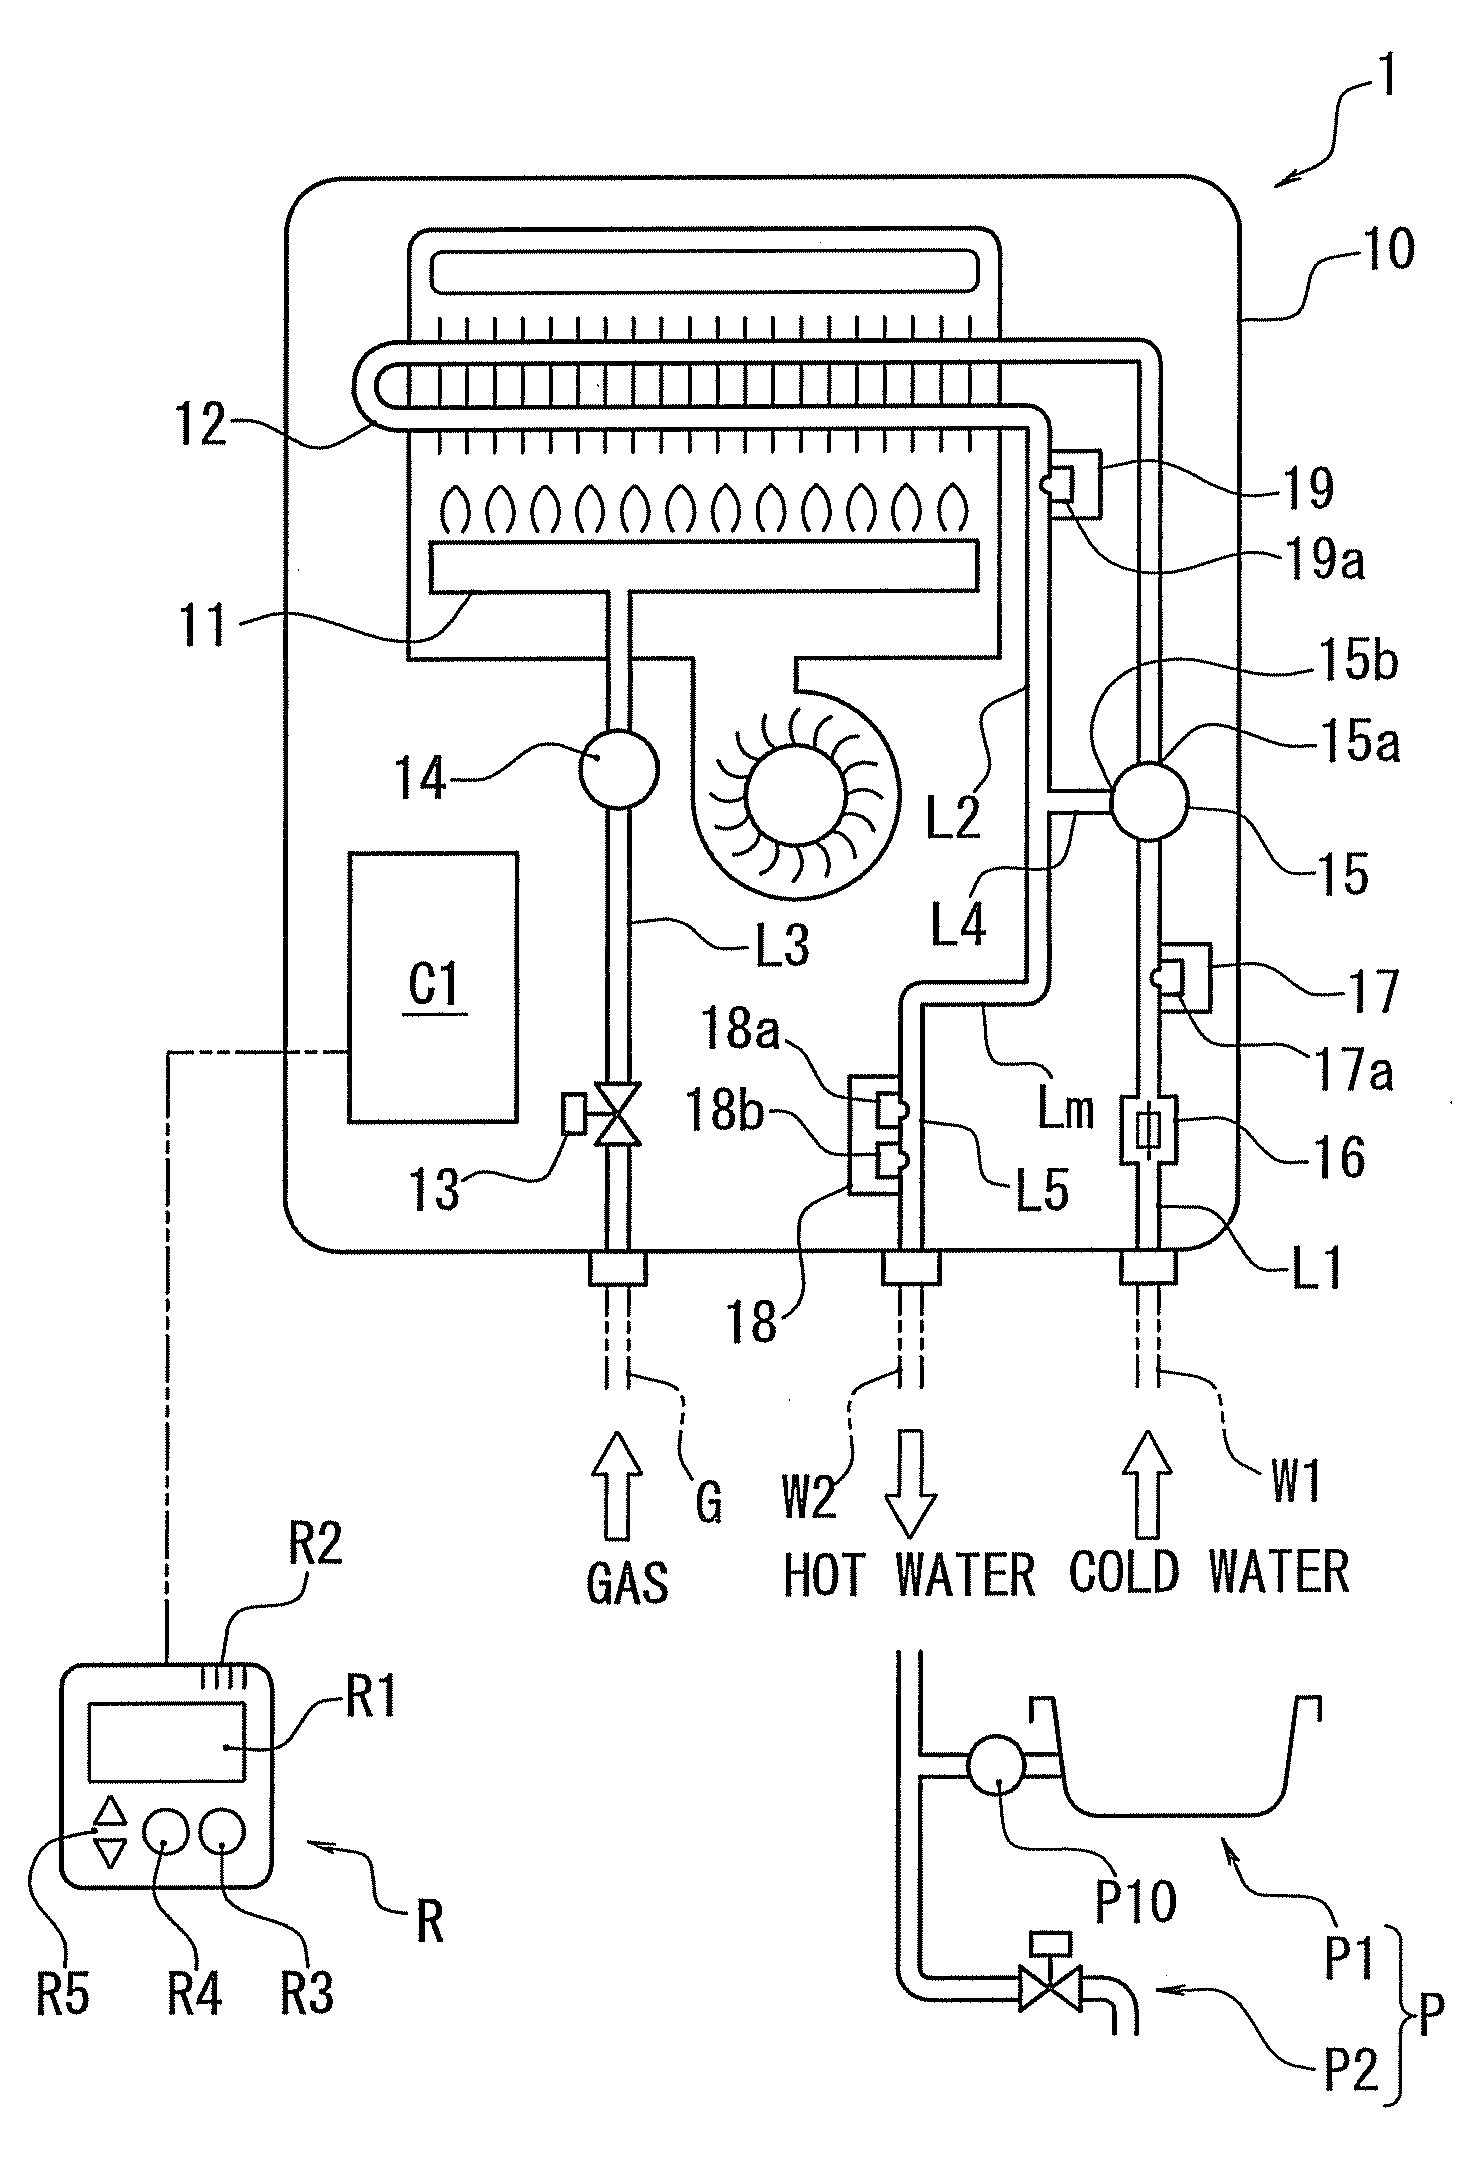 Hot water supply apparatus